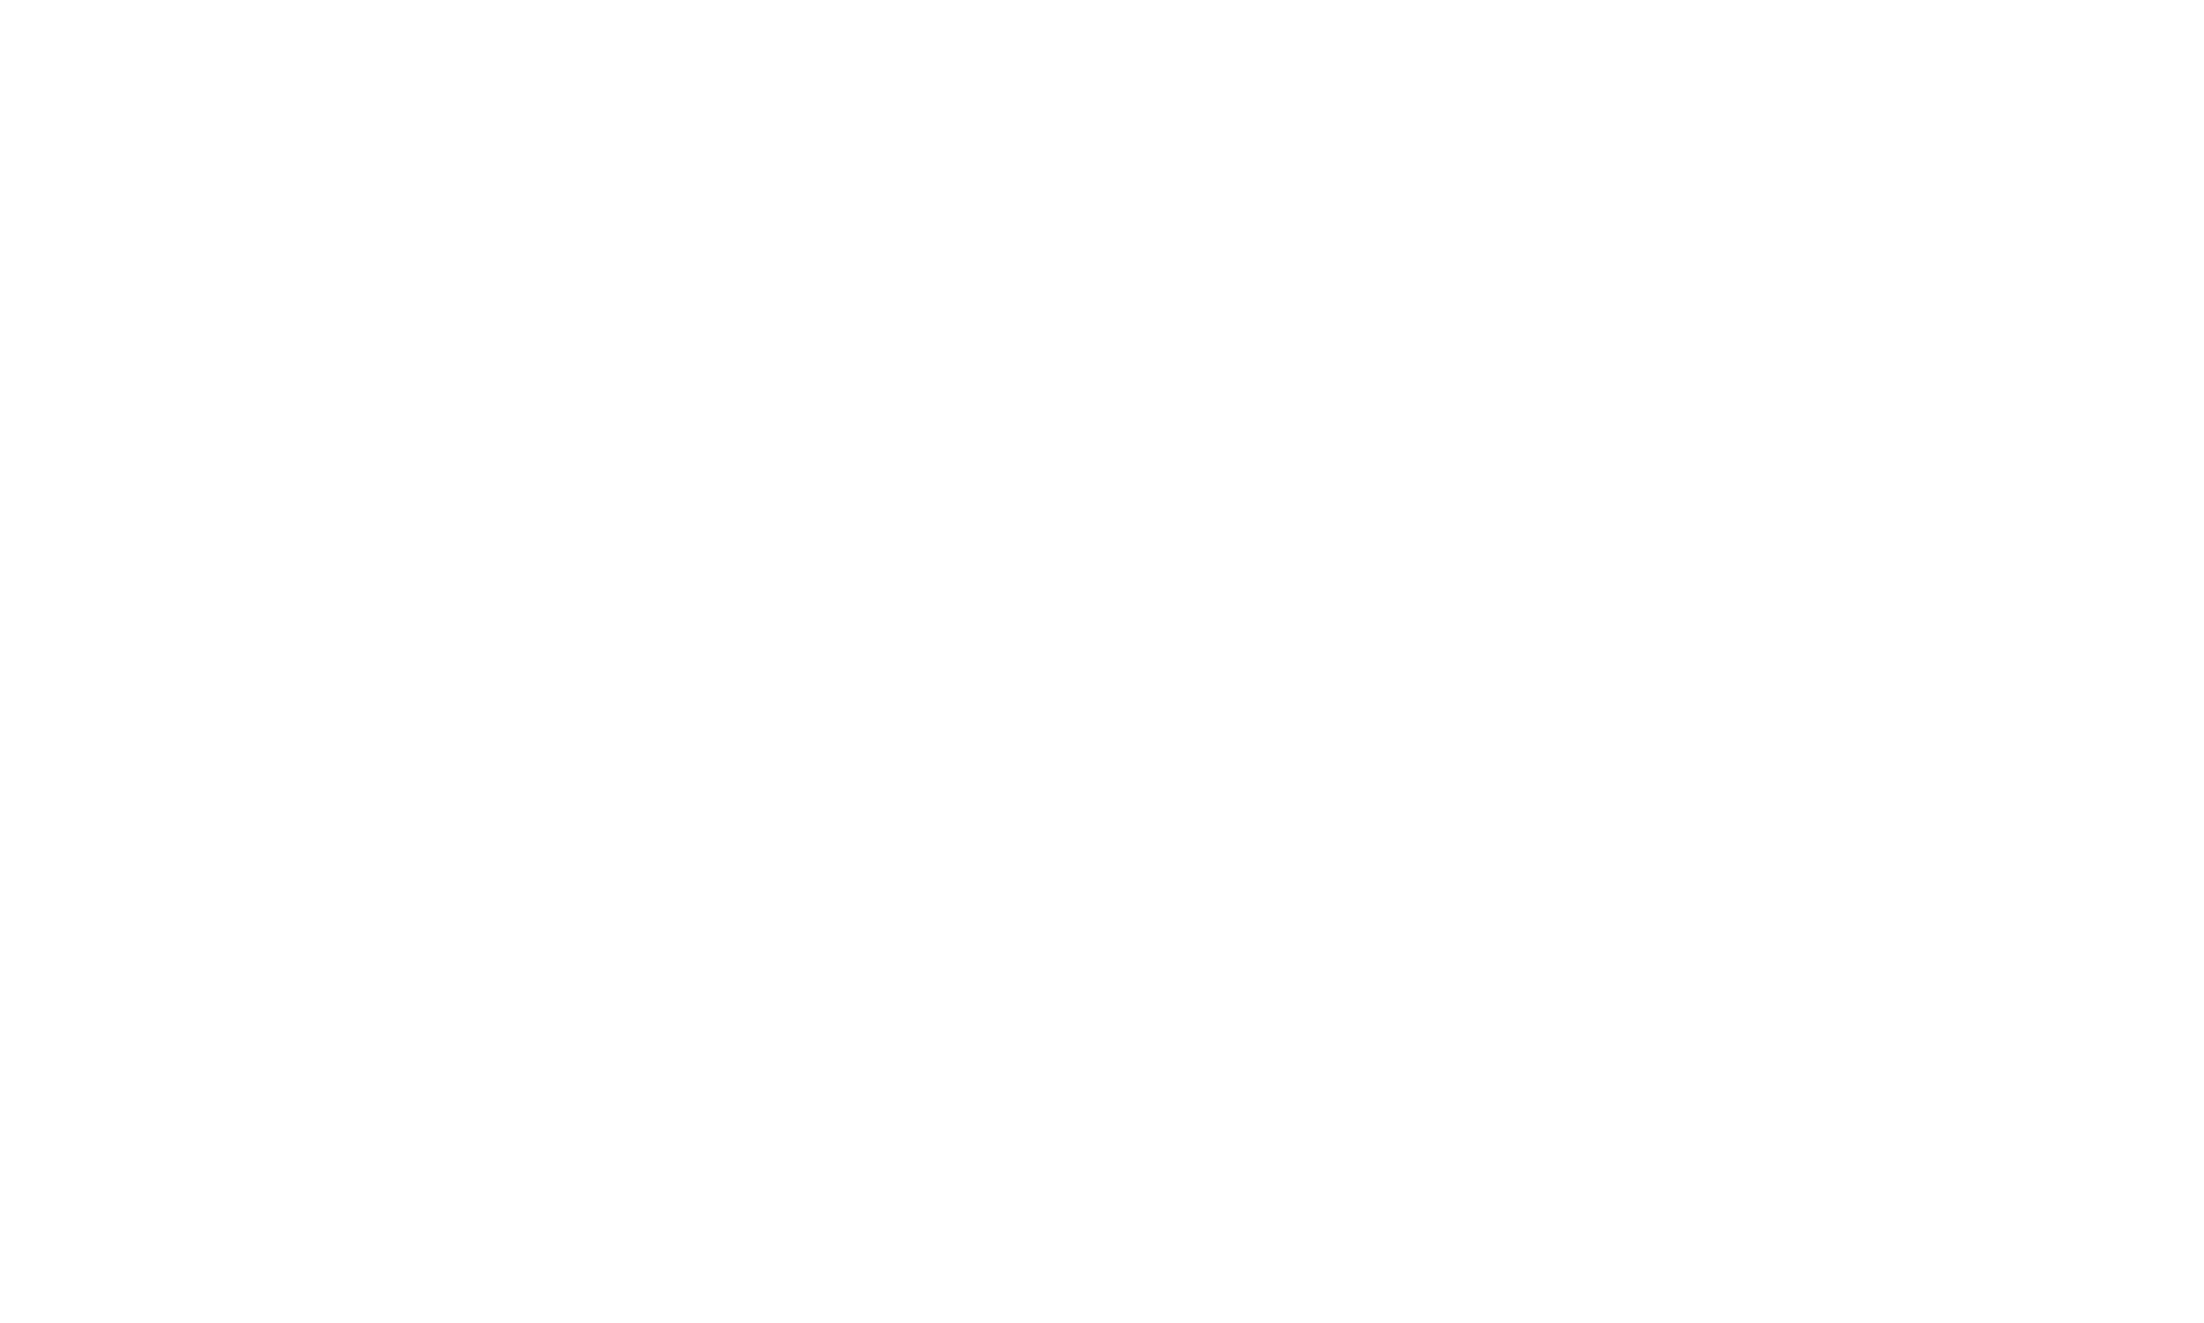 Airplane illustration